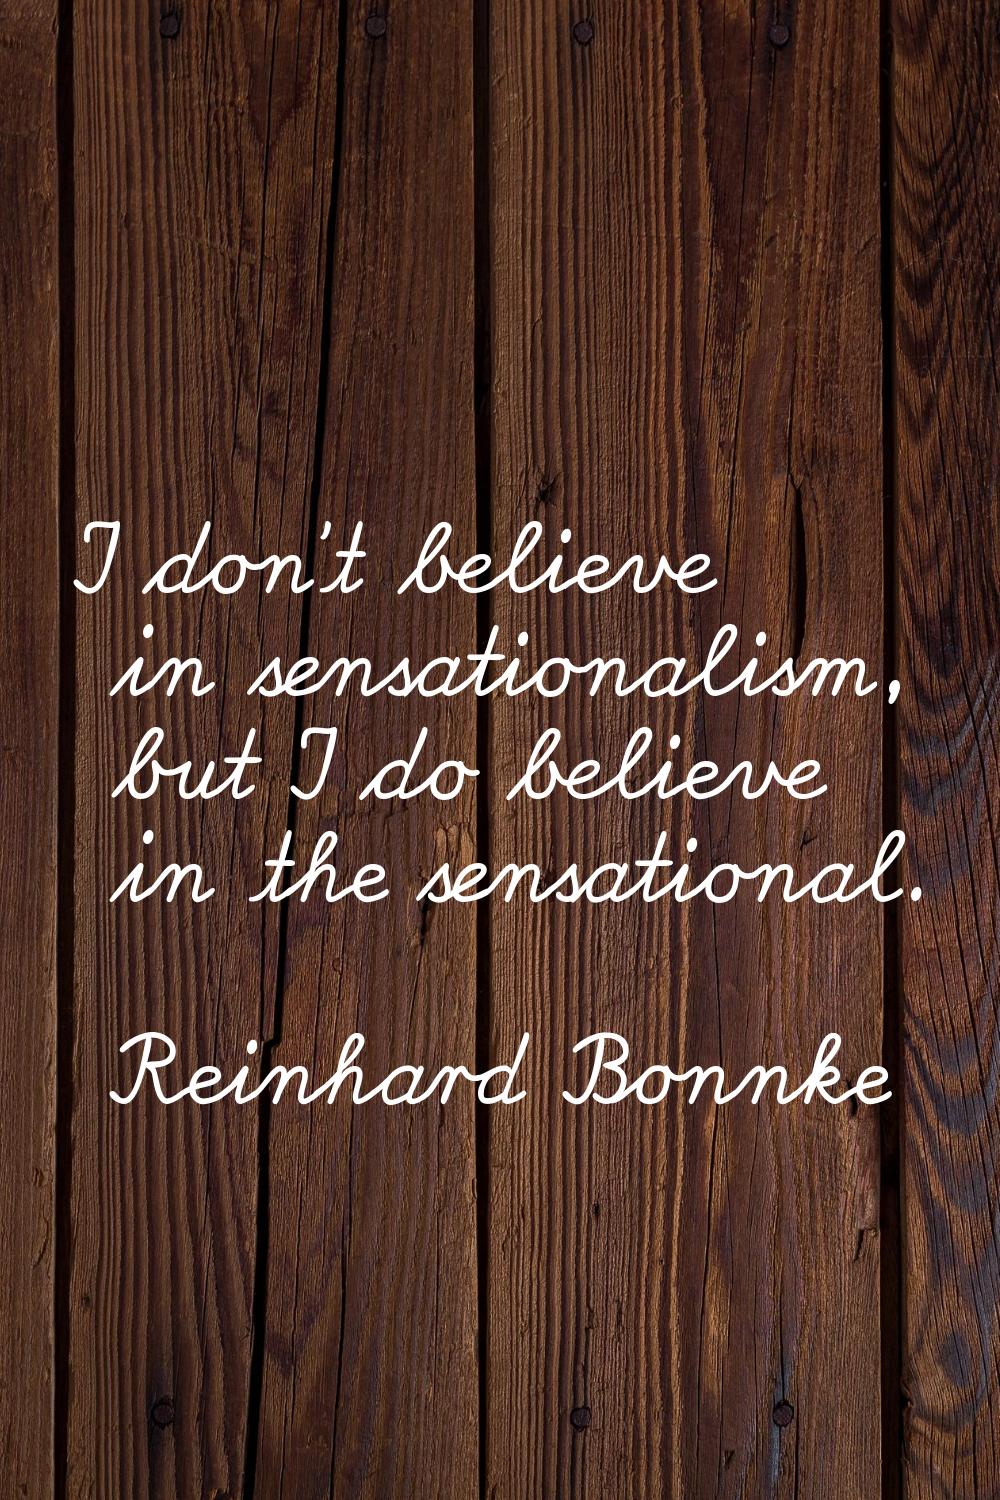 I don't believe in sensationalism, but I do believe in the sensational.